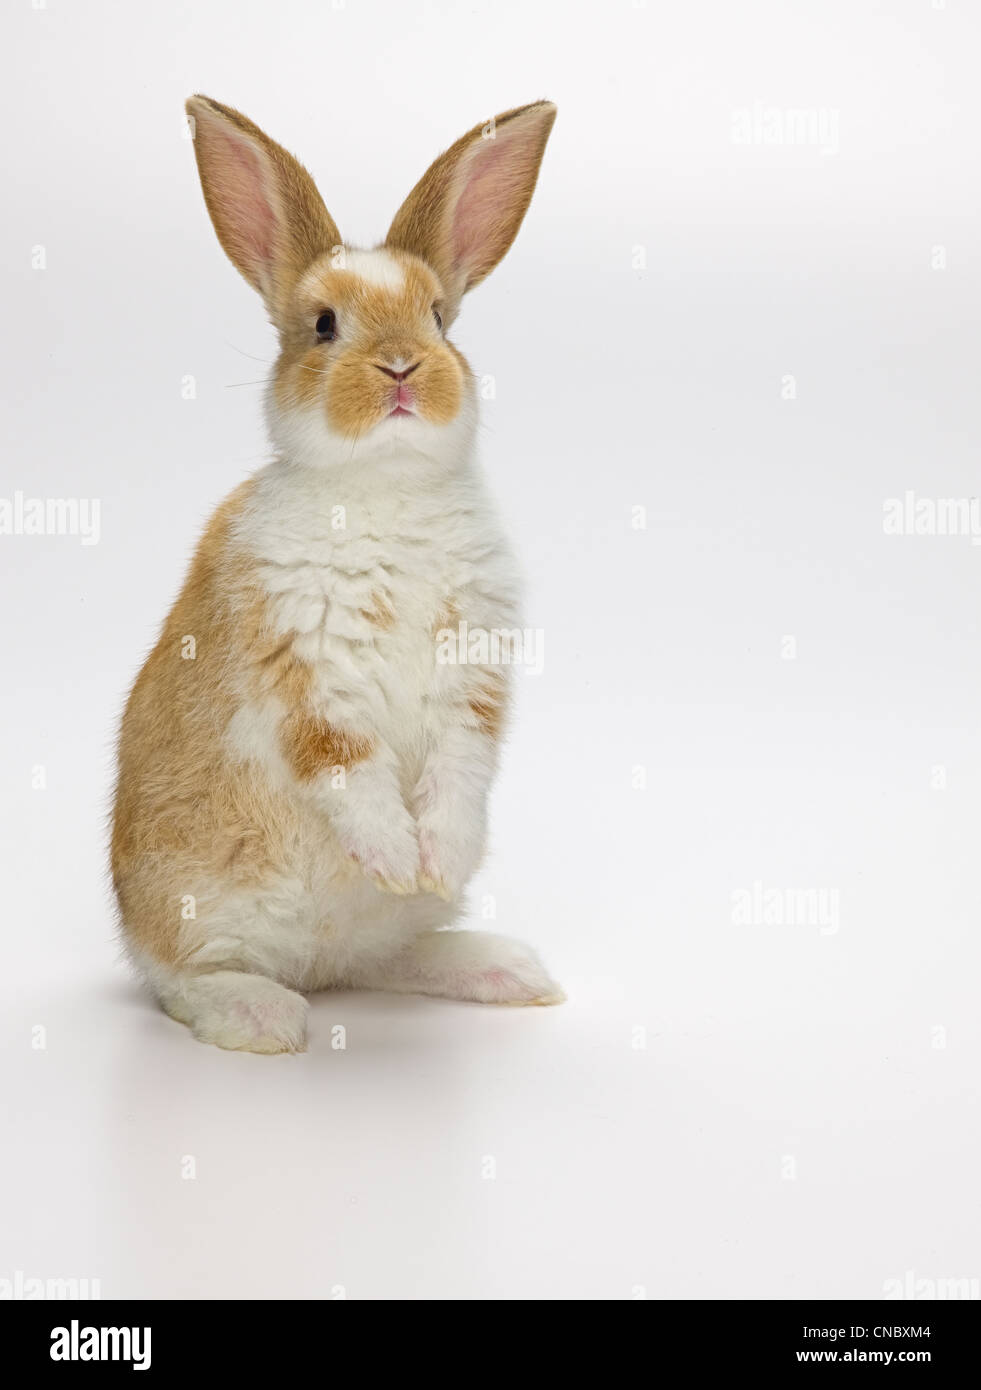 Bunny Rabbit standing up, white background Stock Photo